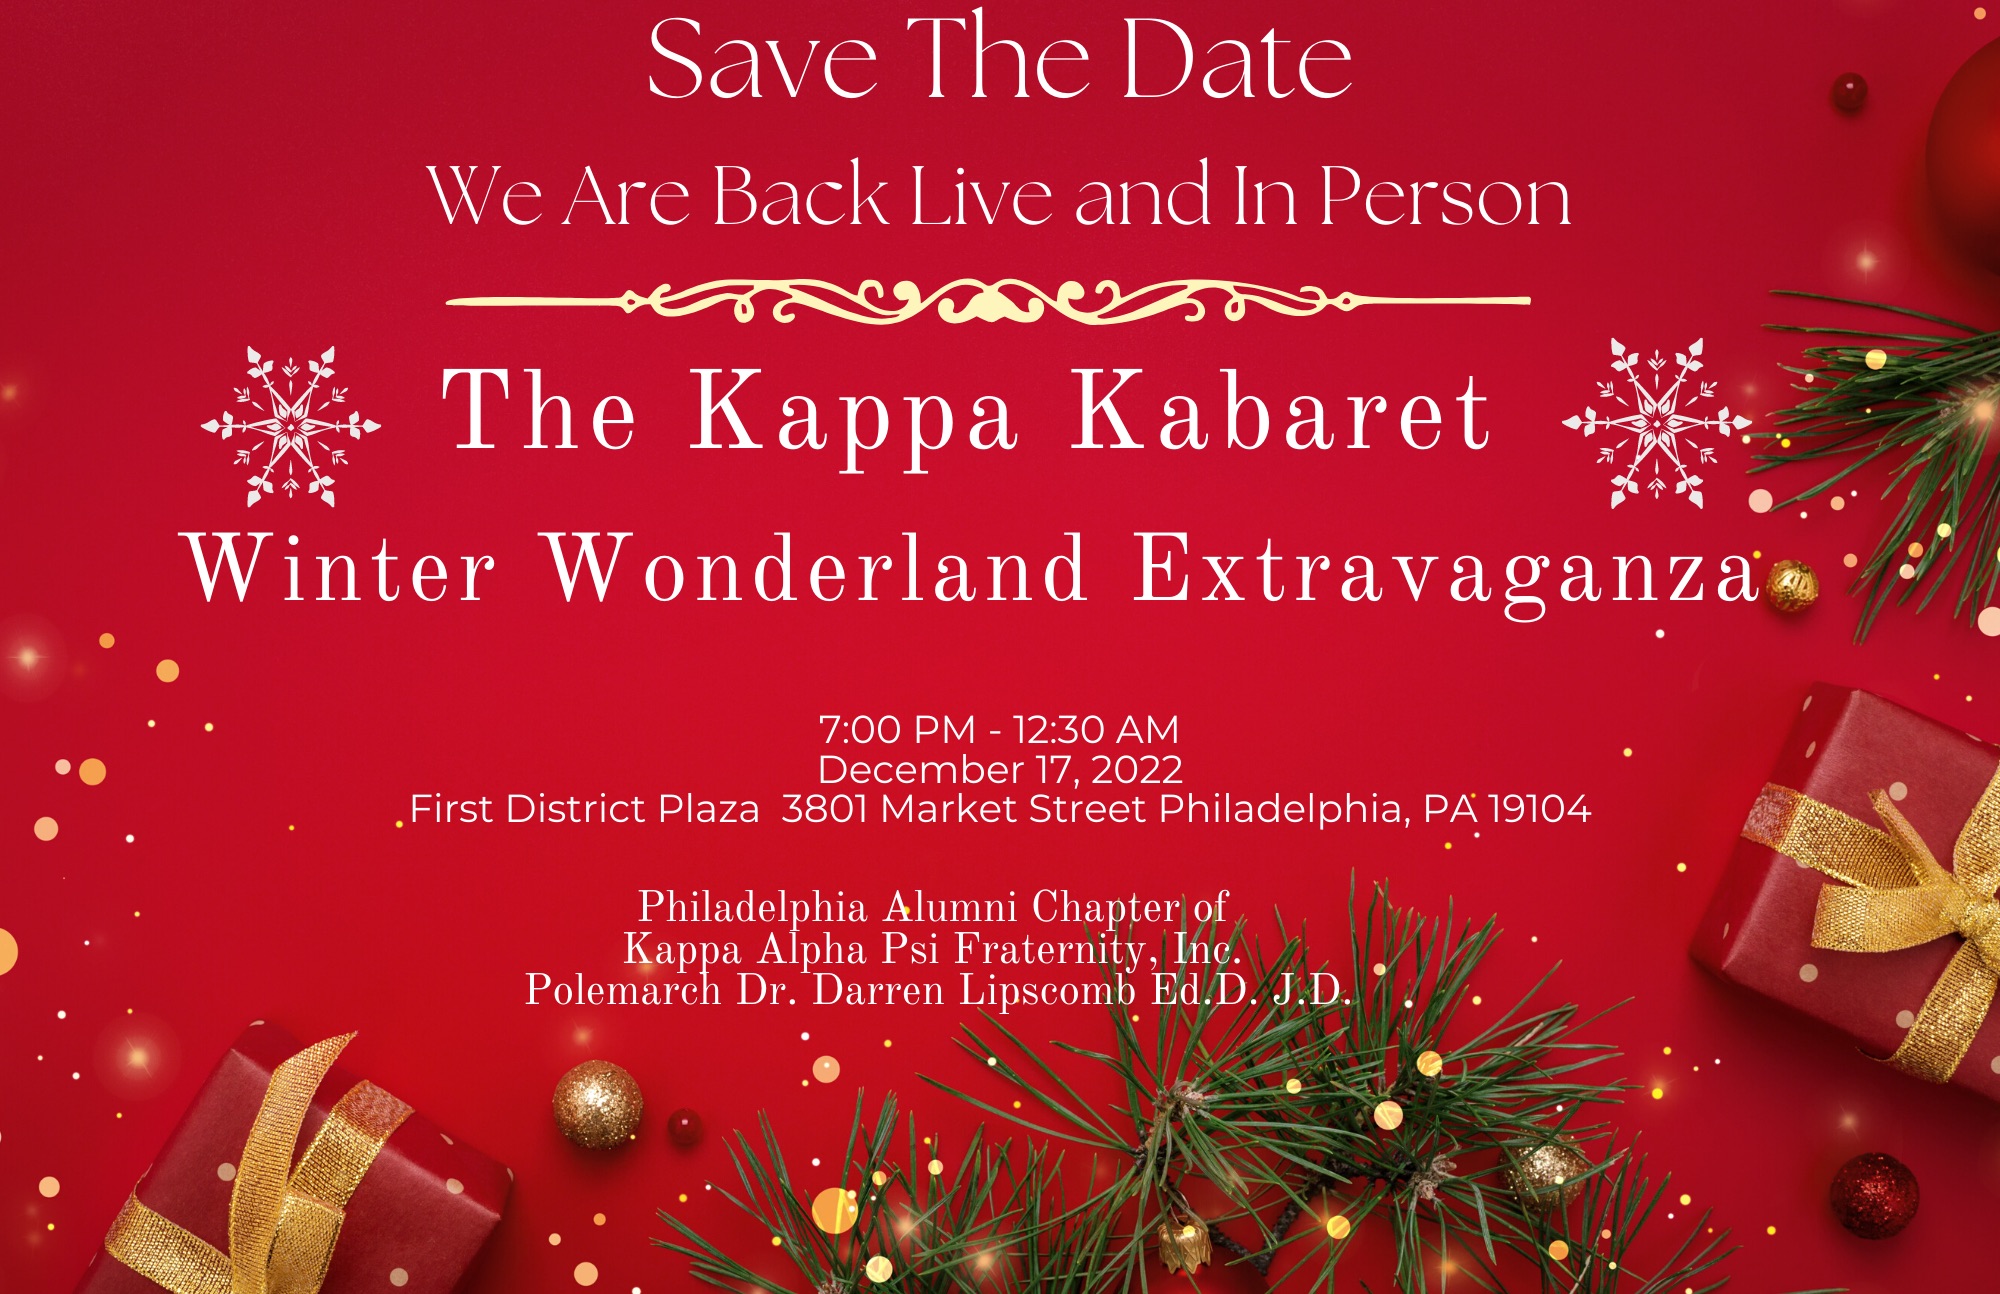 Kappa Kabaret 2022: Save The Date